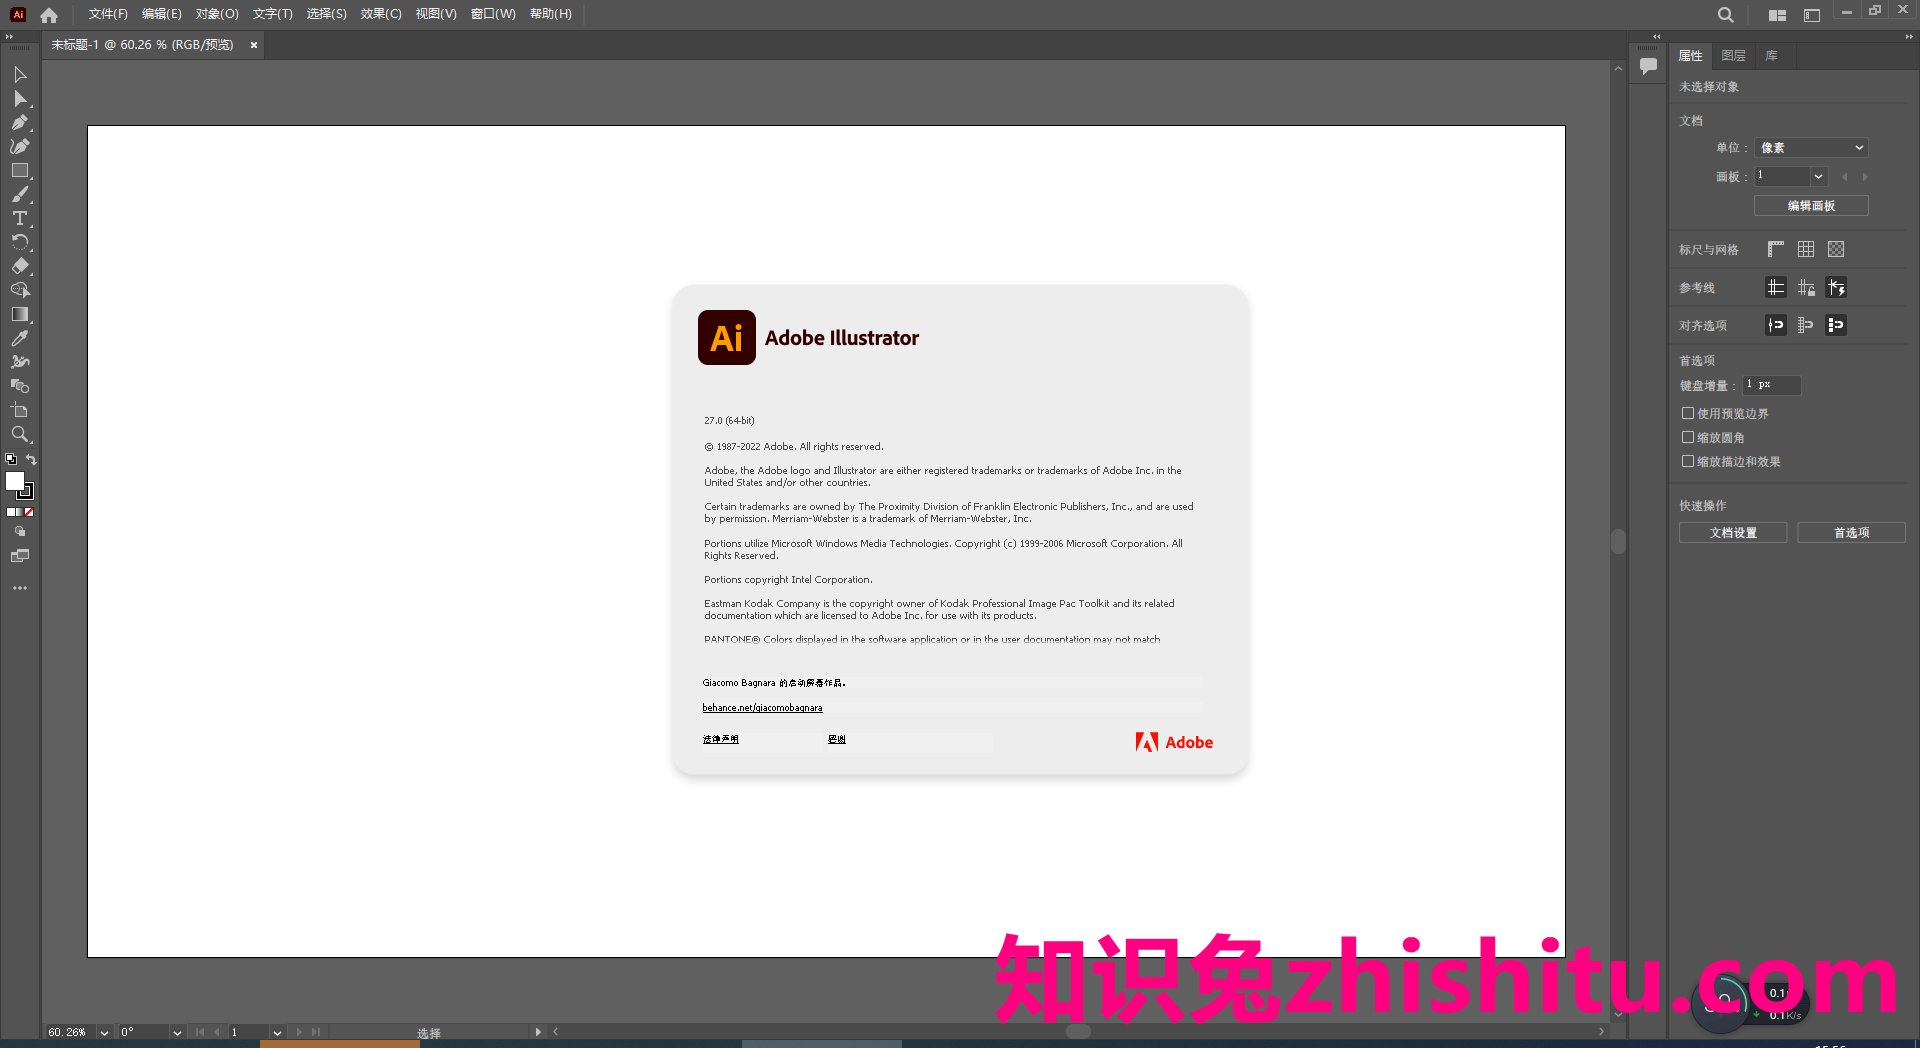 Adobe Illustrator 2023 v27.9.0.80 instal the new version for windows